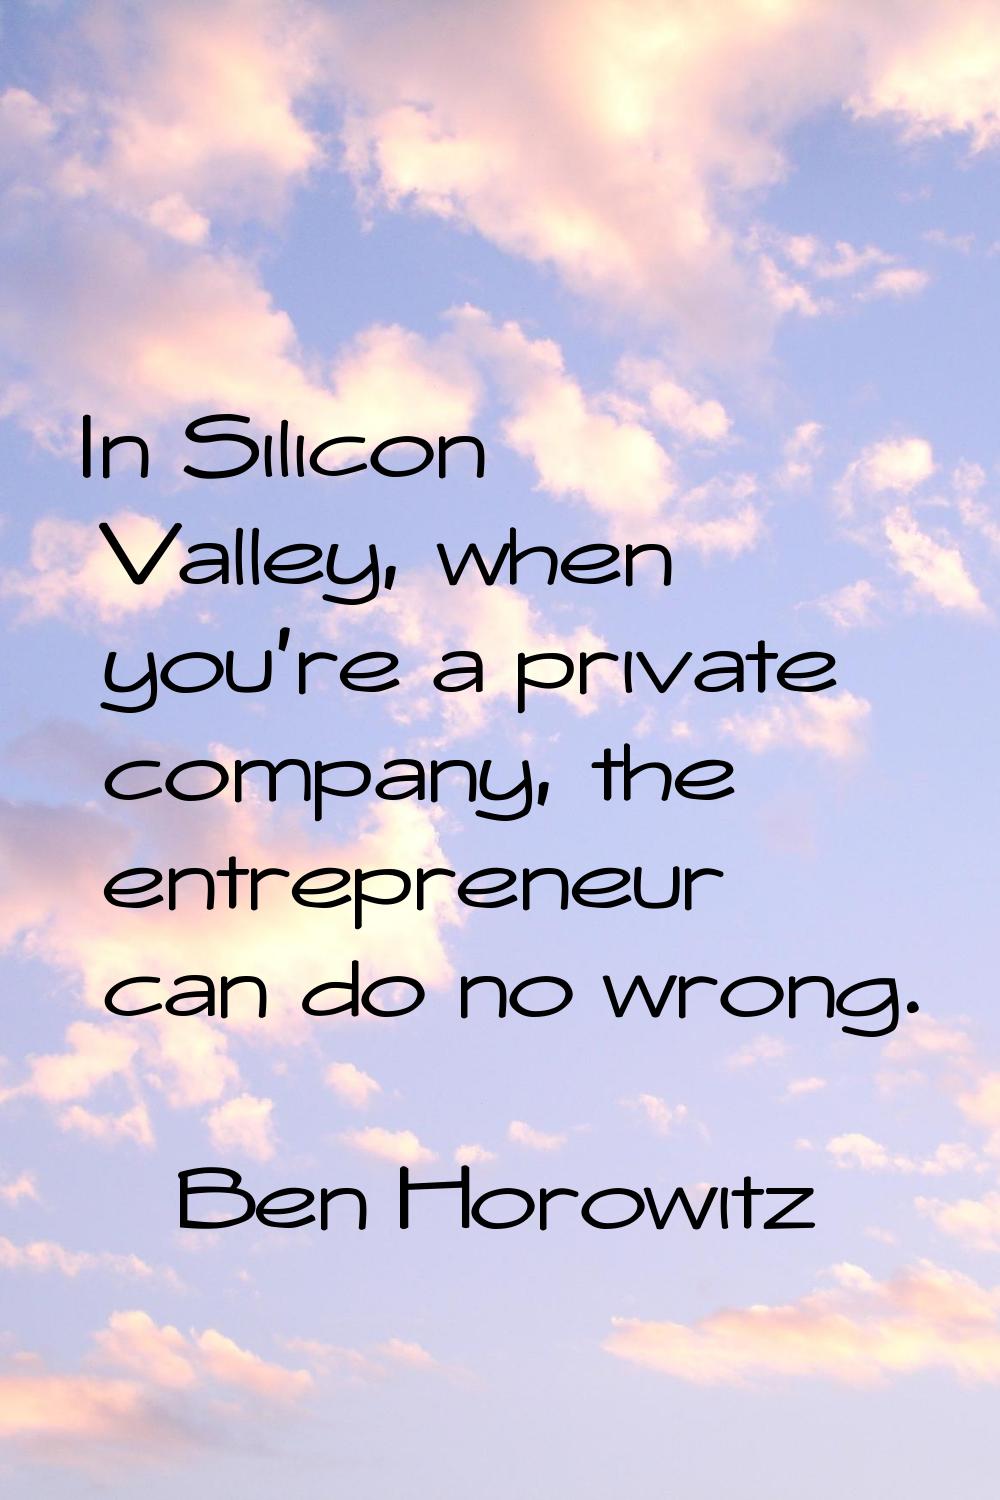 In Silicon Valley, when you're a private company, the entrepreneur can do no wrong.